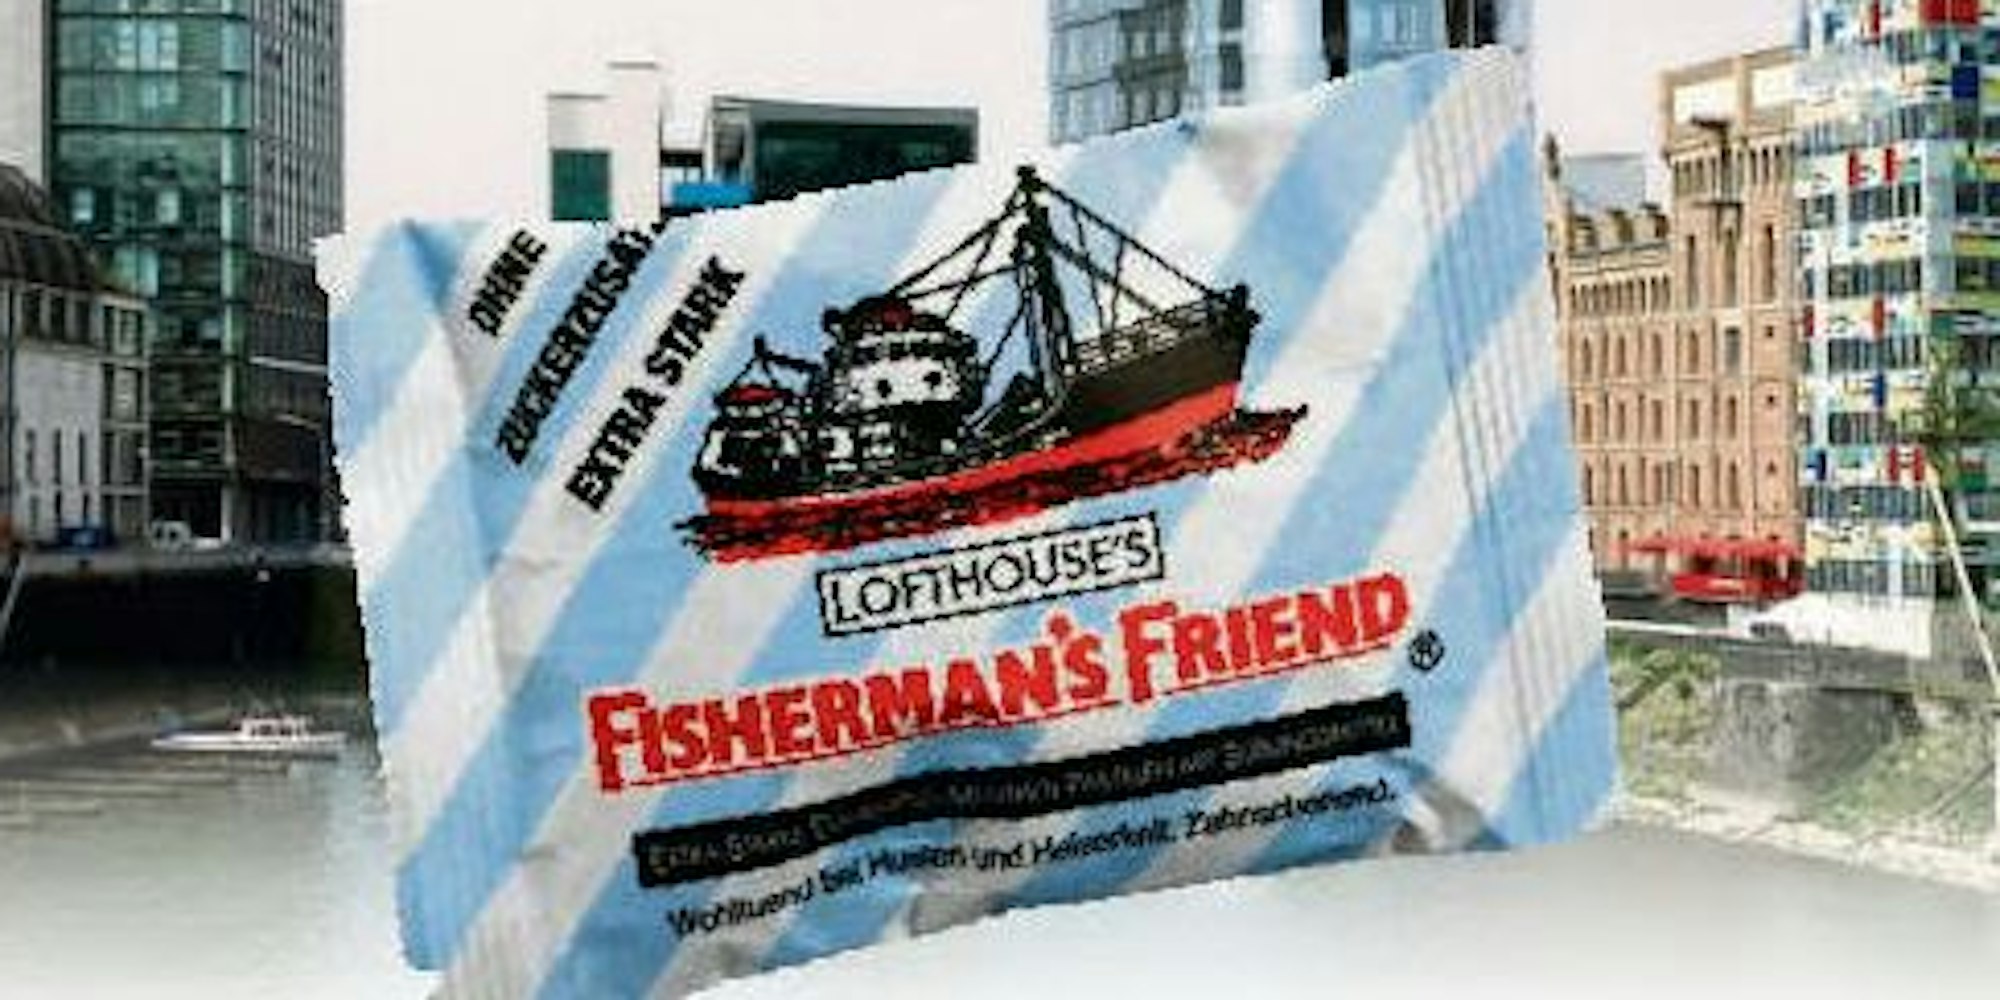 bonn_duesseldorf_fishermans